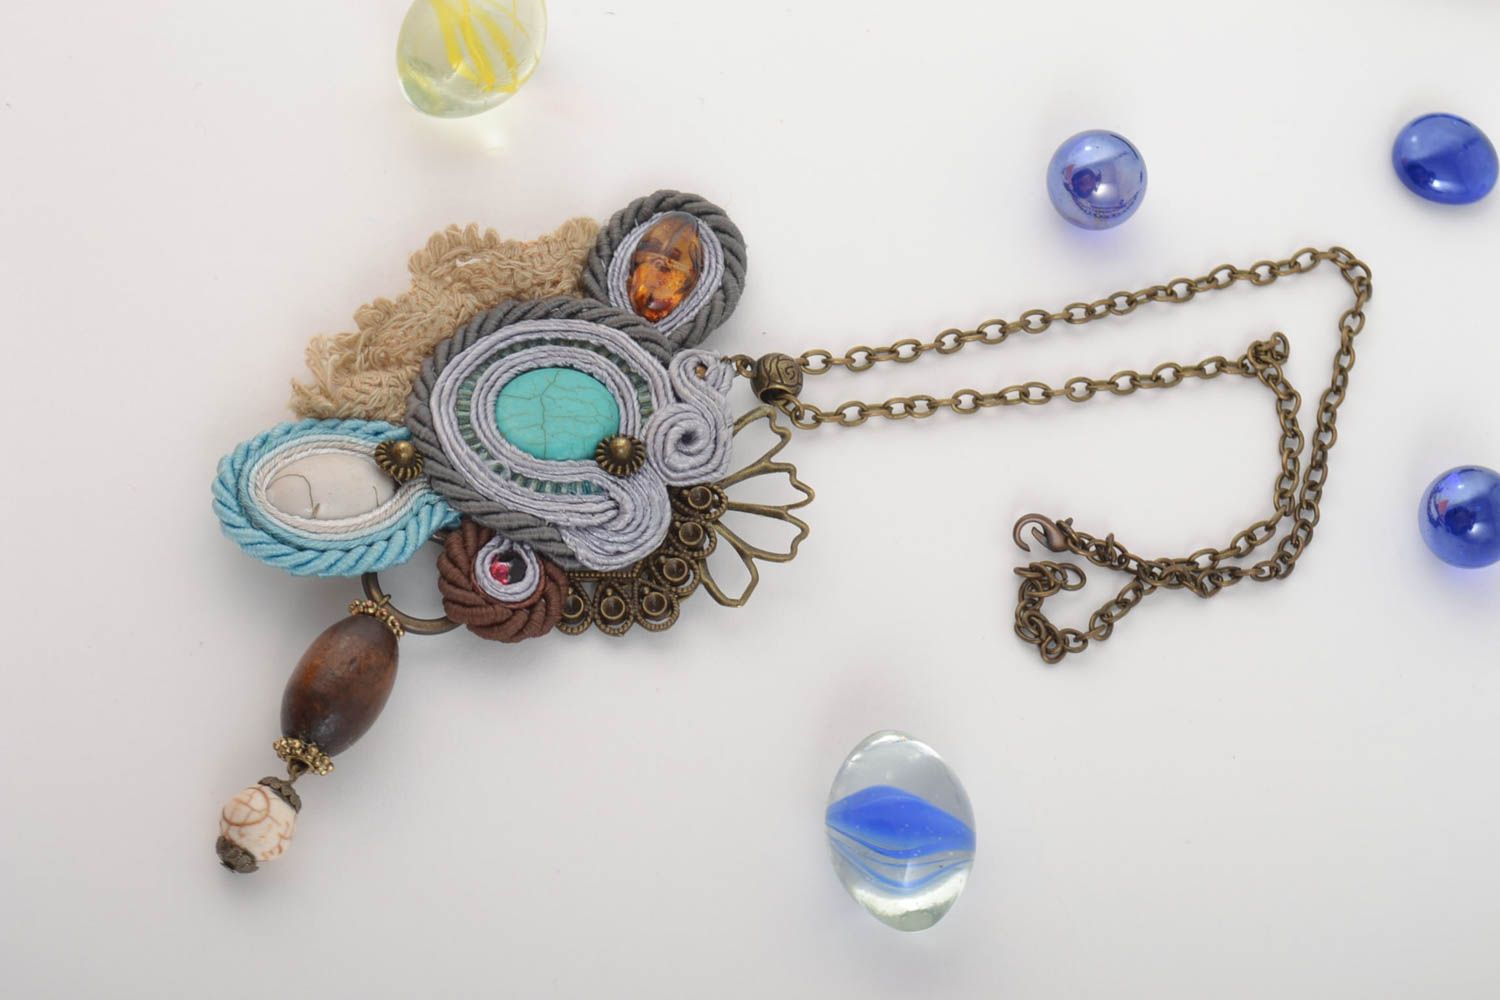 Handmade pendant soutache pendant designer pendant unusual gift for women photo 2